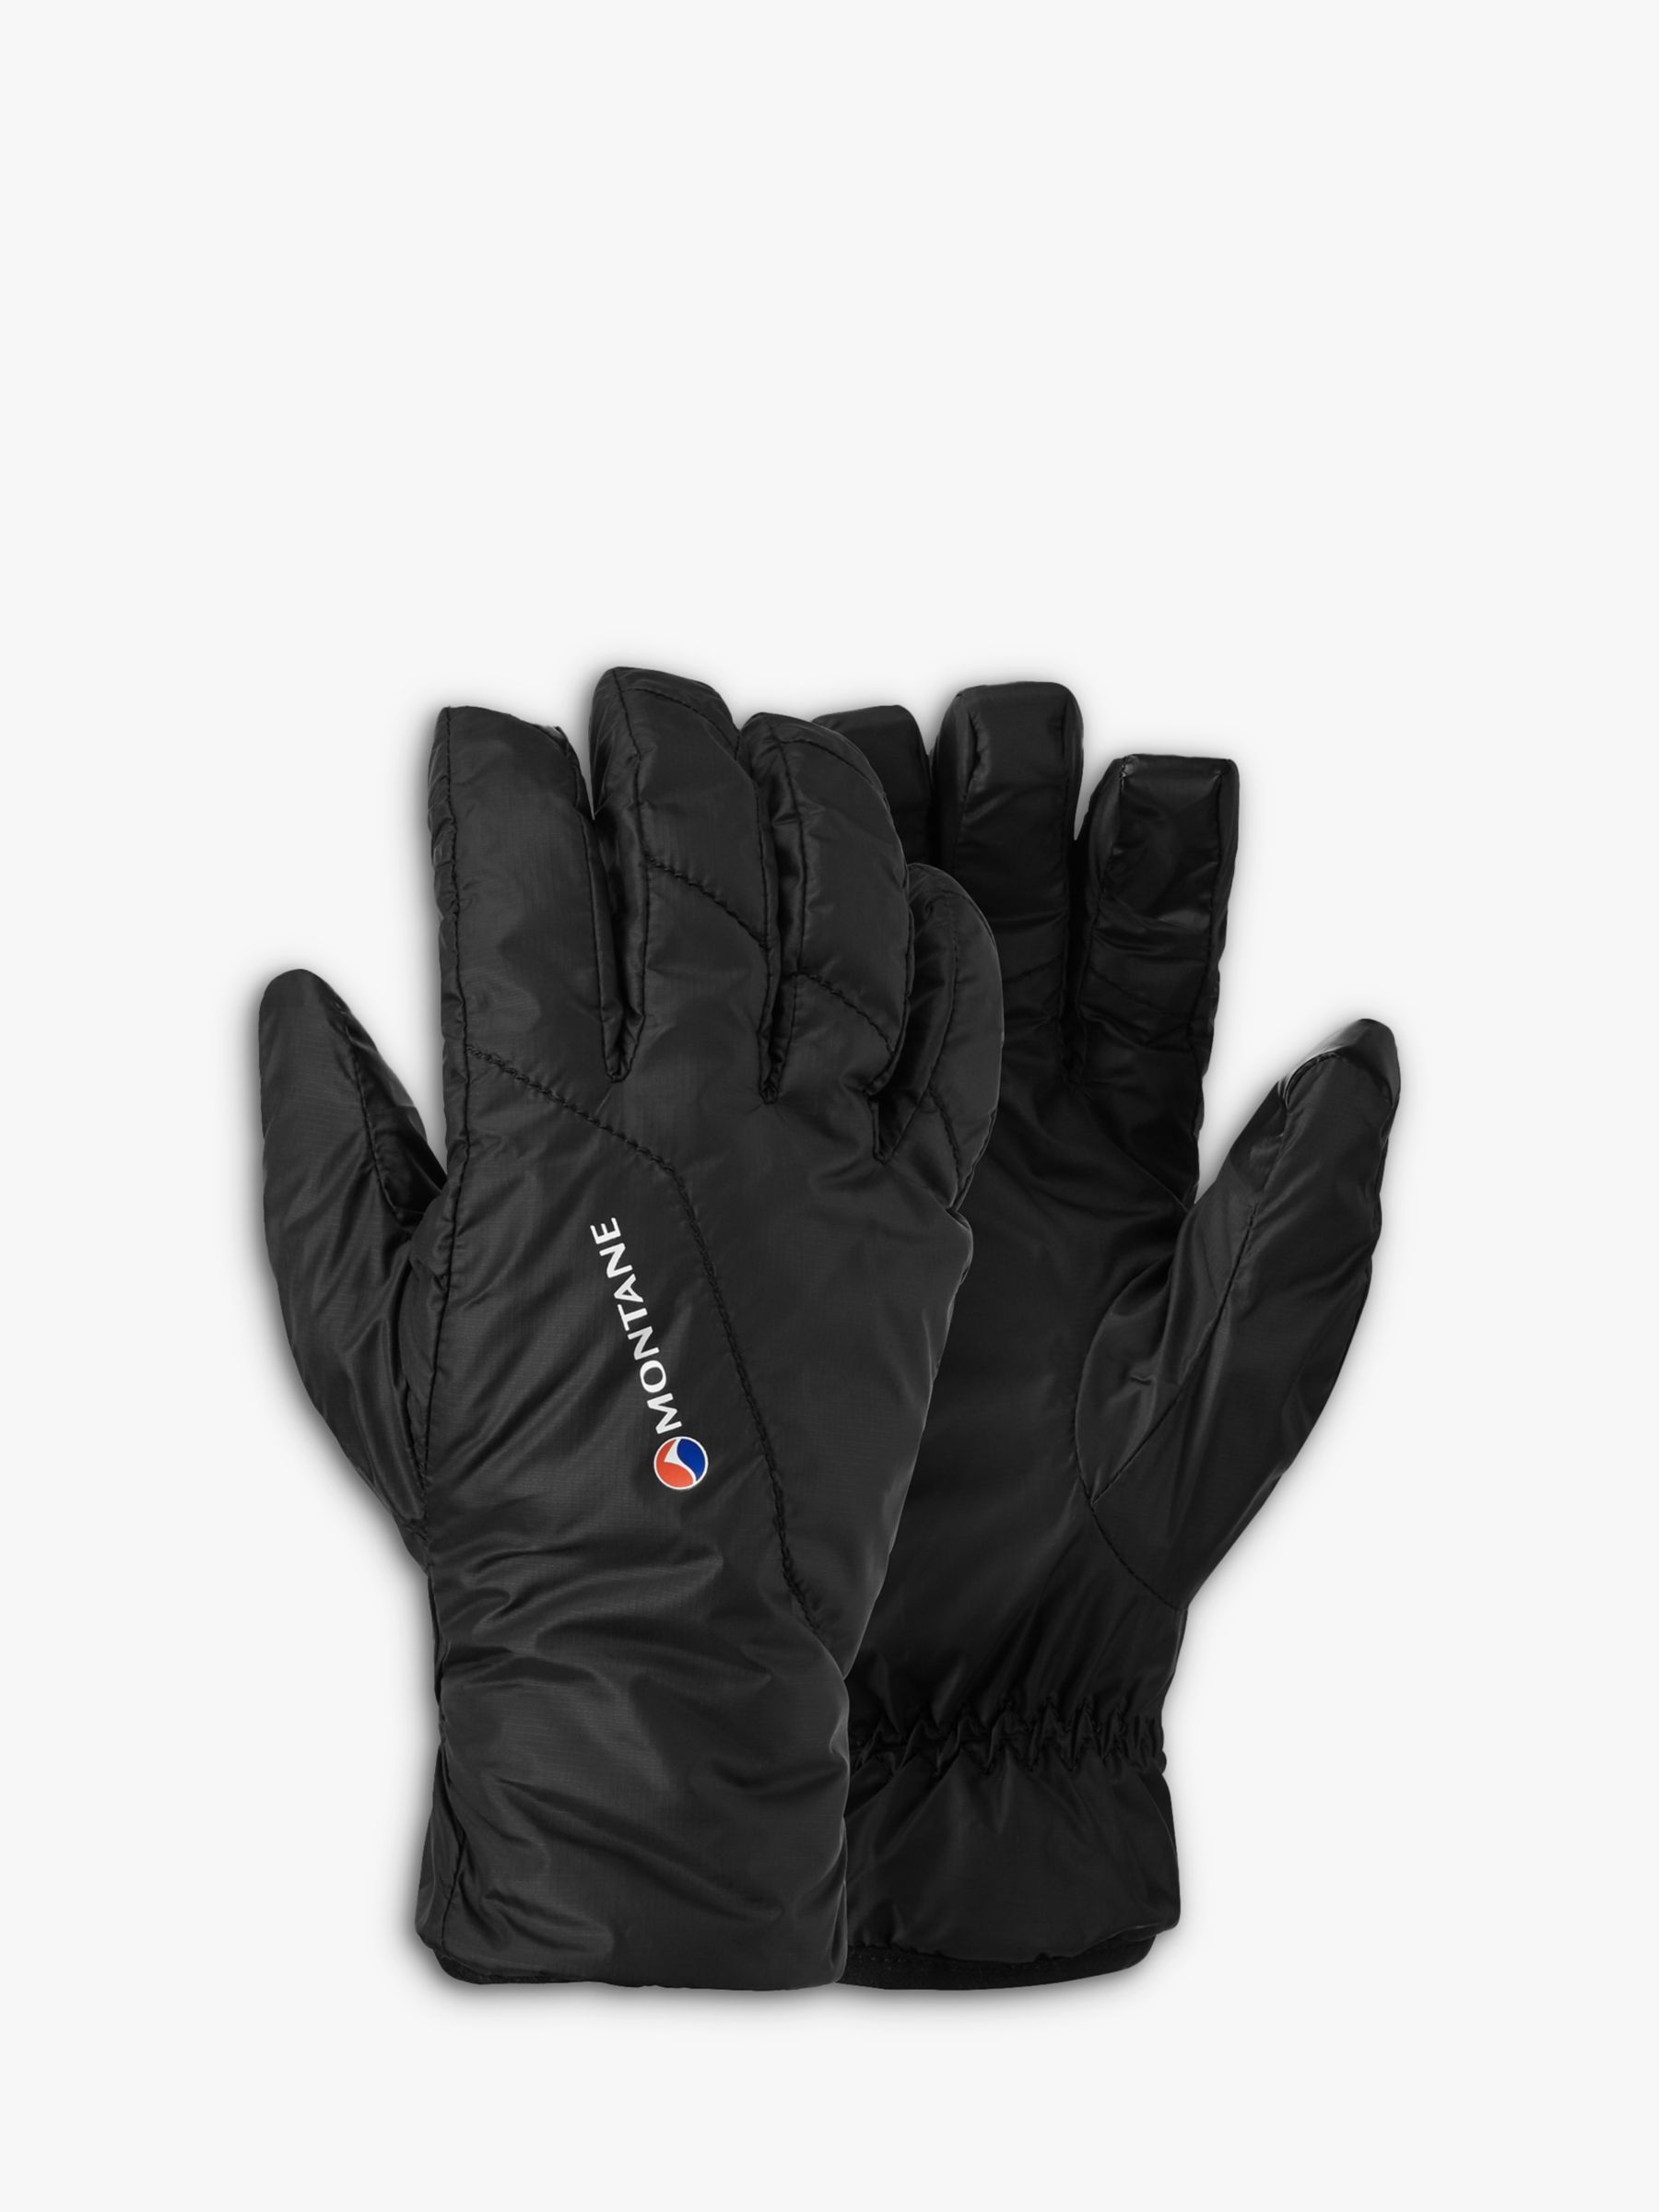 Montane Men's Prism Insulated Gloves, Black, S